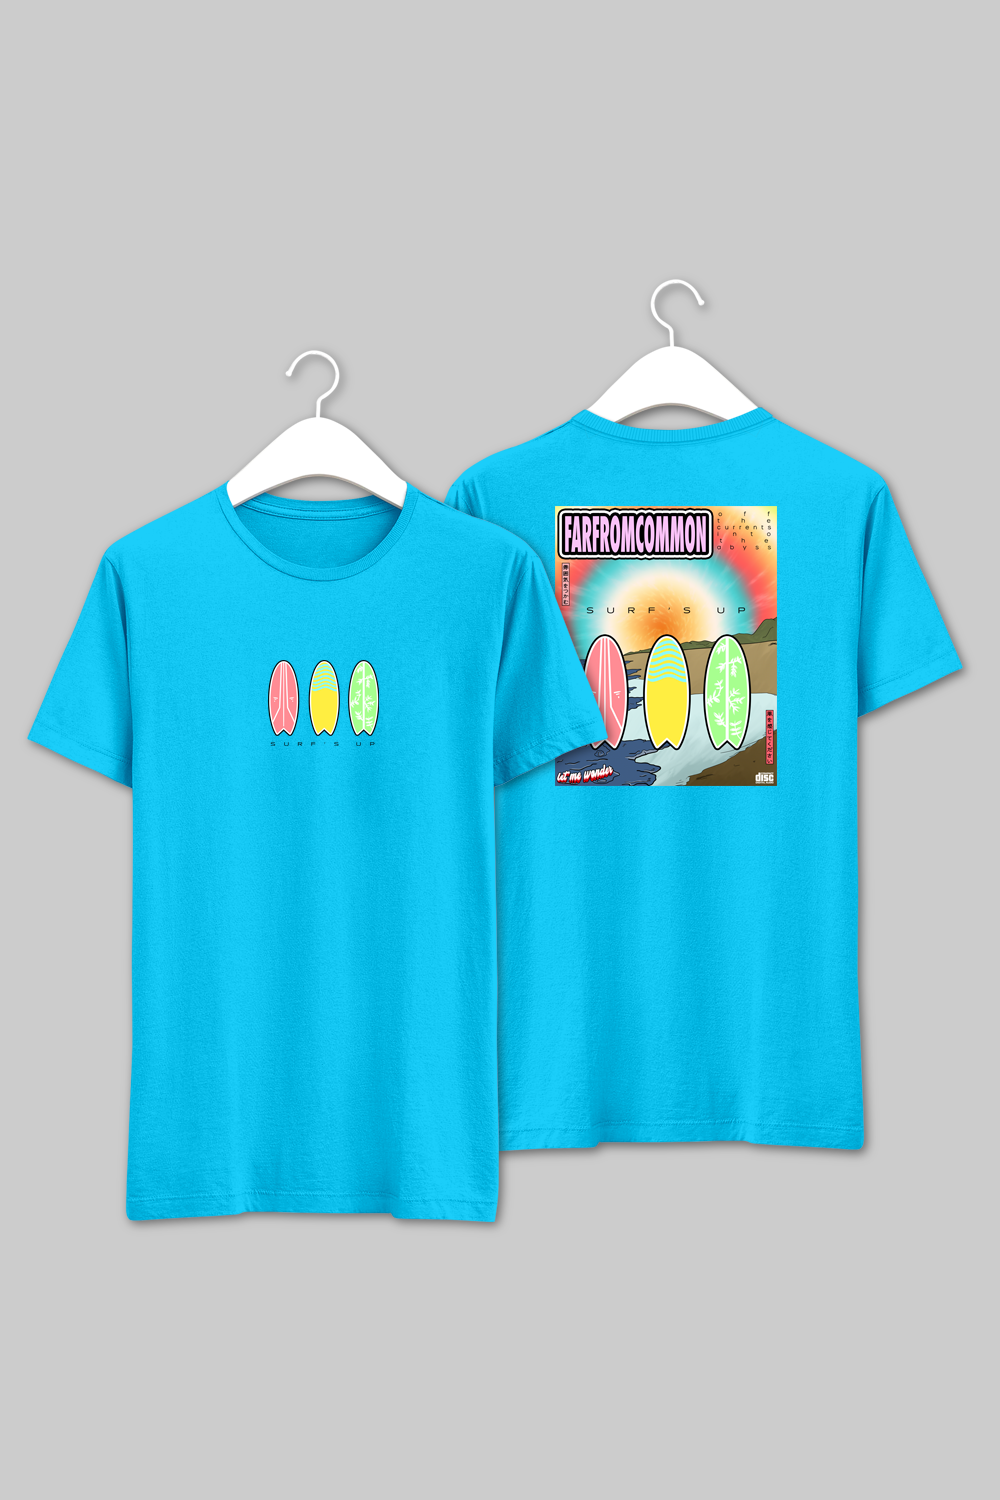 Surfs Up Sky Blue Unisex T-shirt